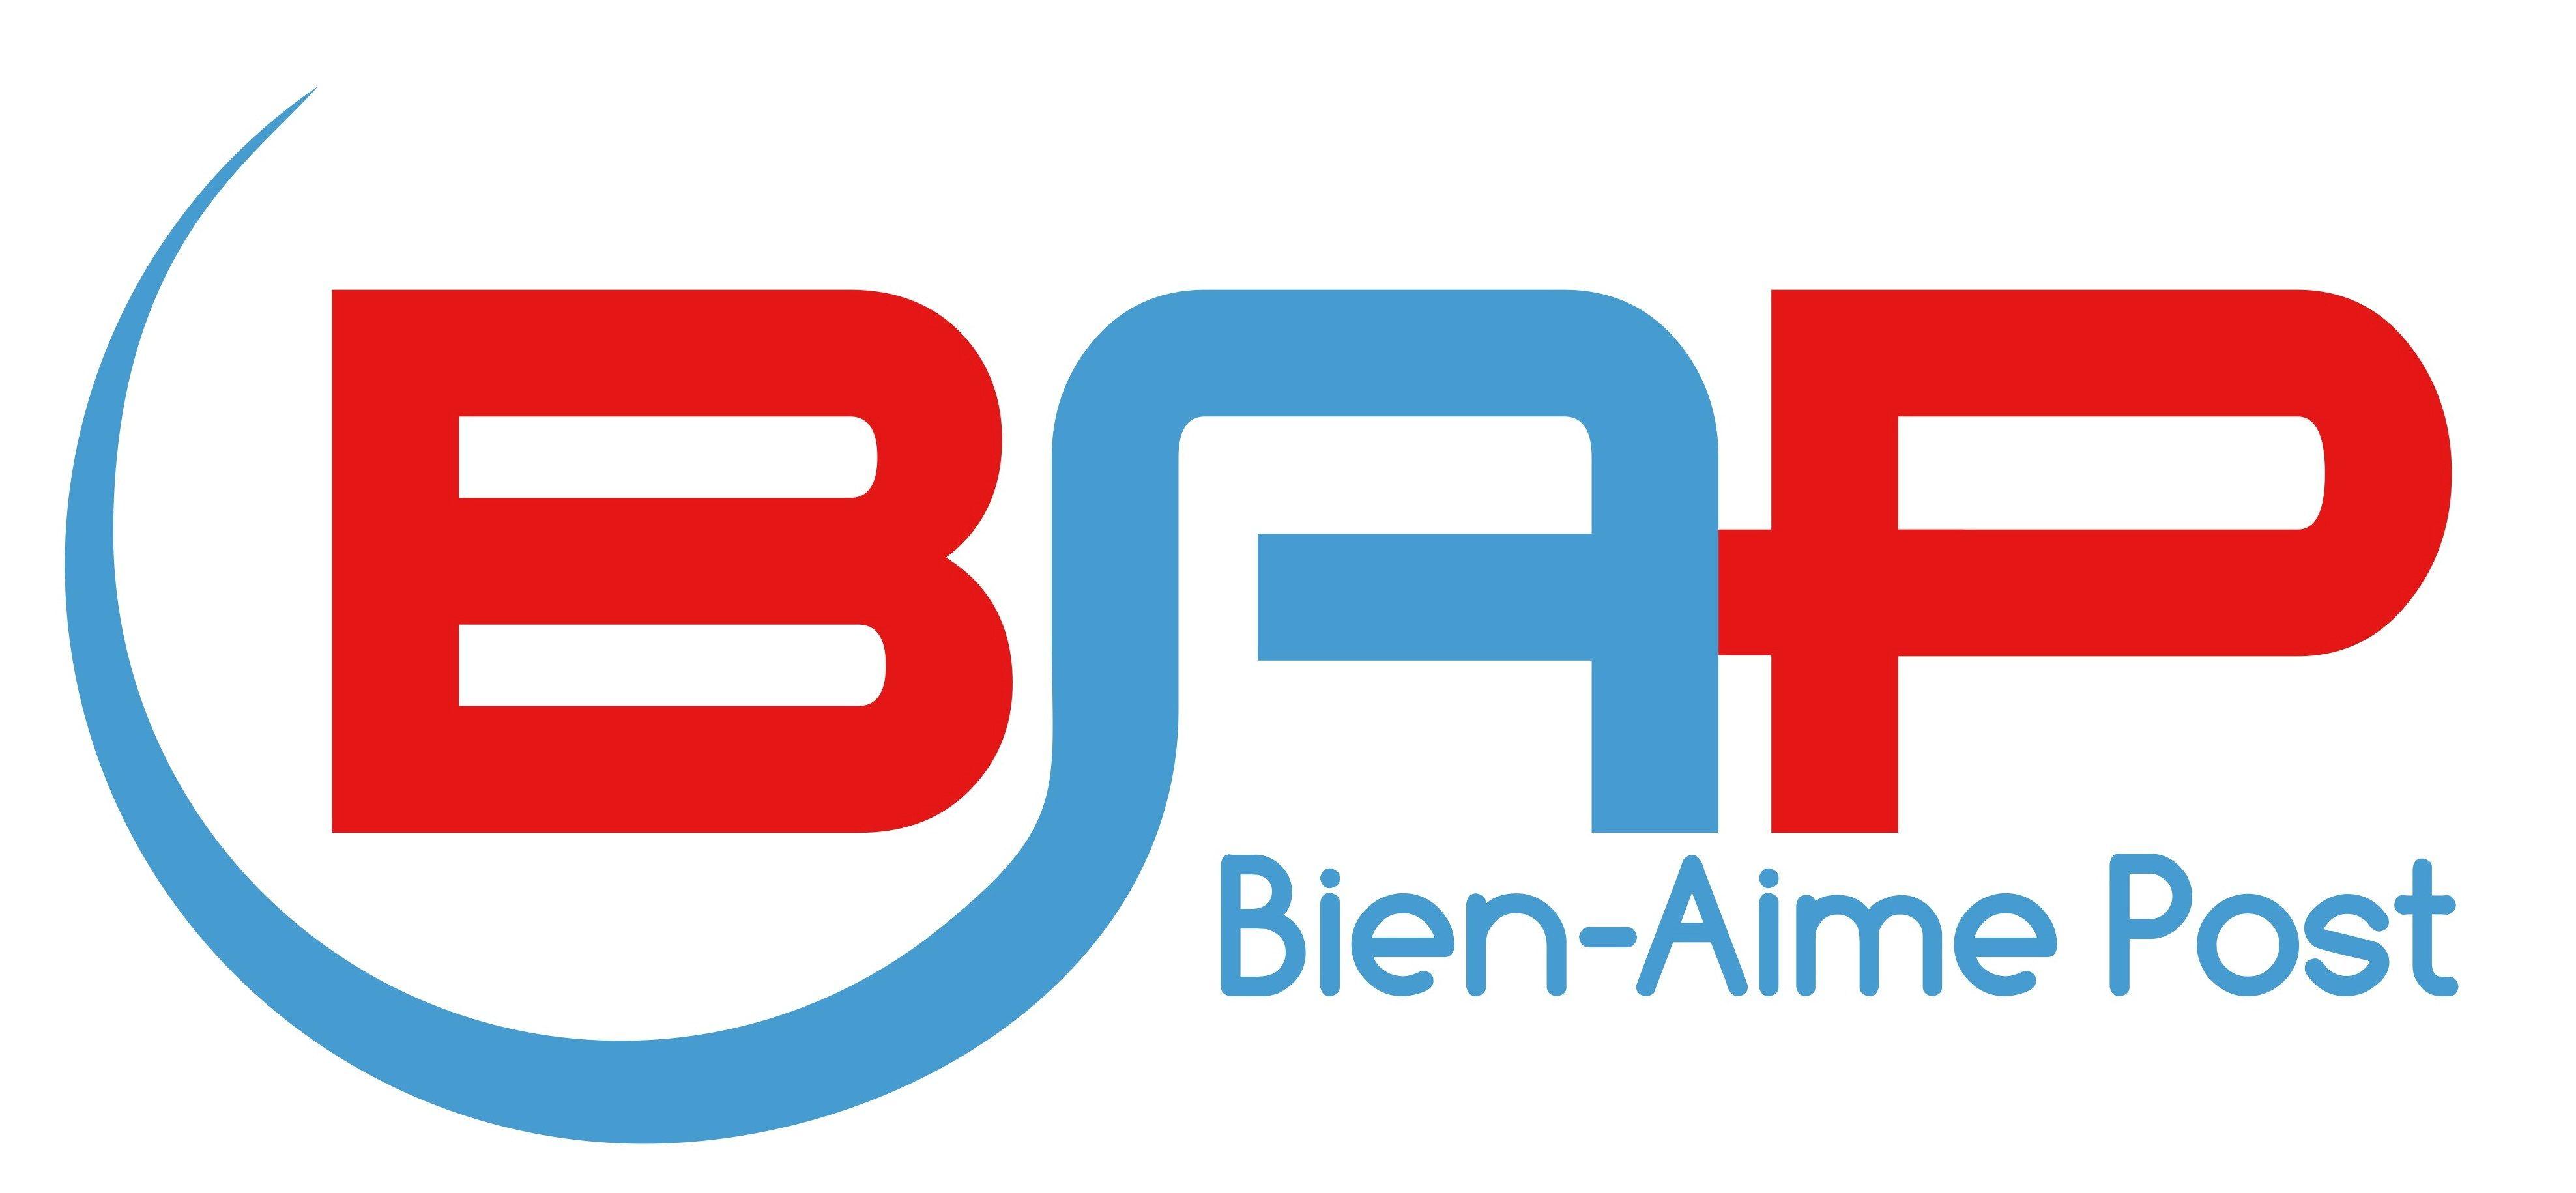 Bap Logo - BAP Logo 2016 - Bien-Aime Post